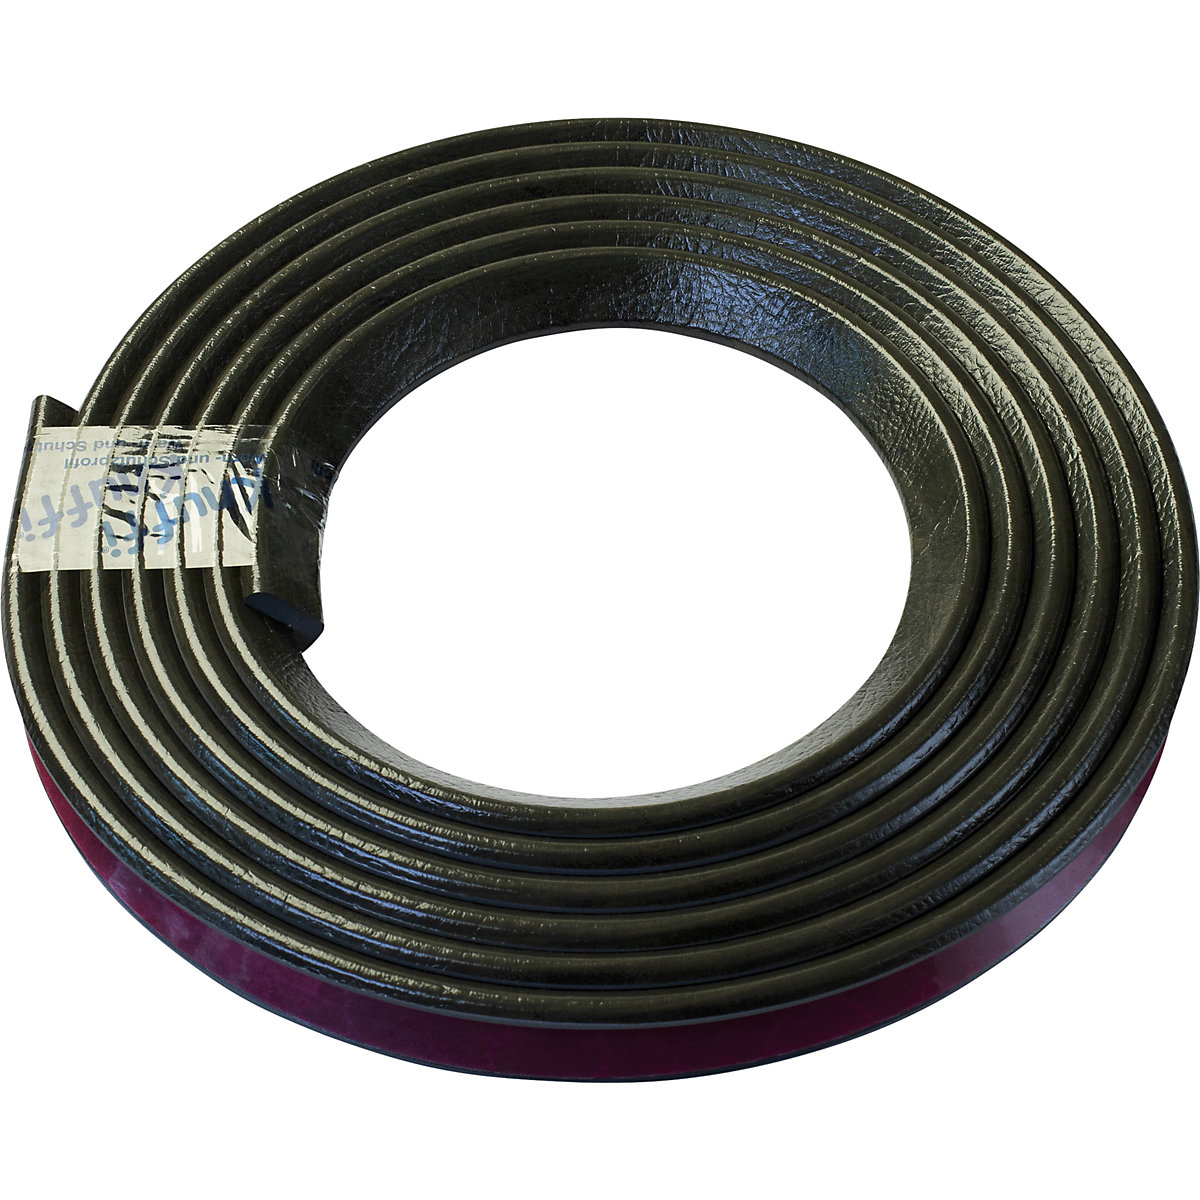 Knuffi® corner protection – SHG, type E, 1 x 5 m roll, dark wood finish-15